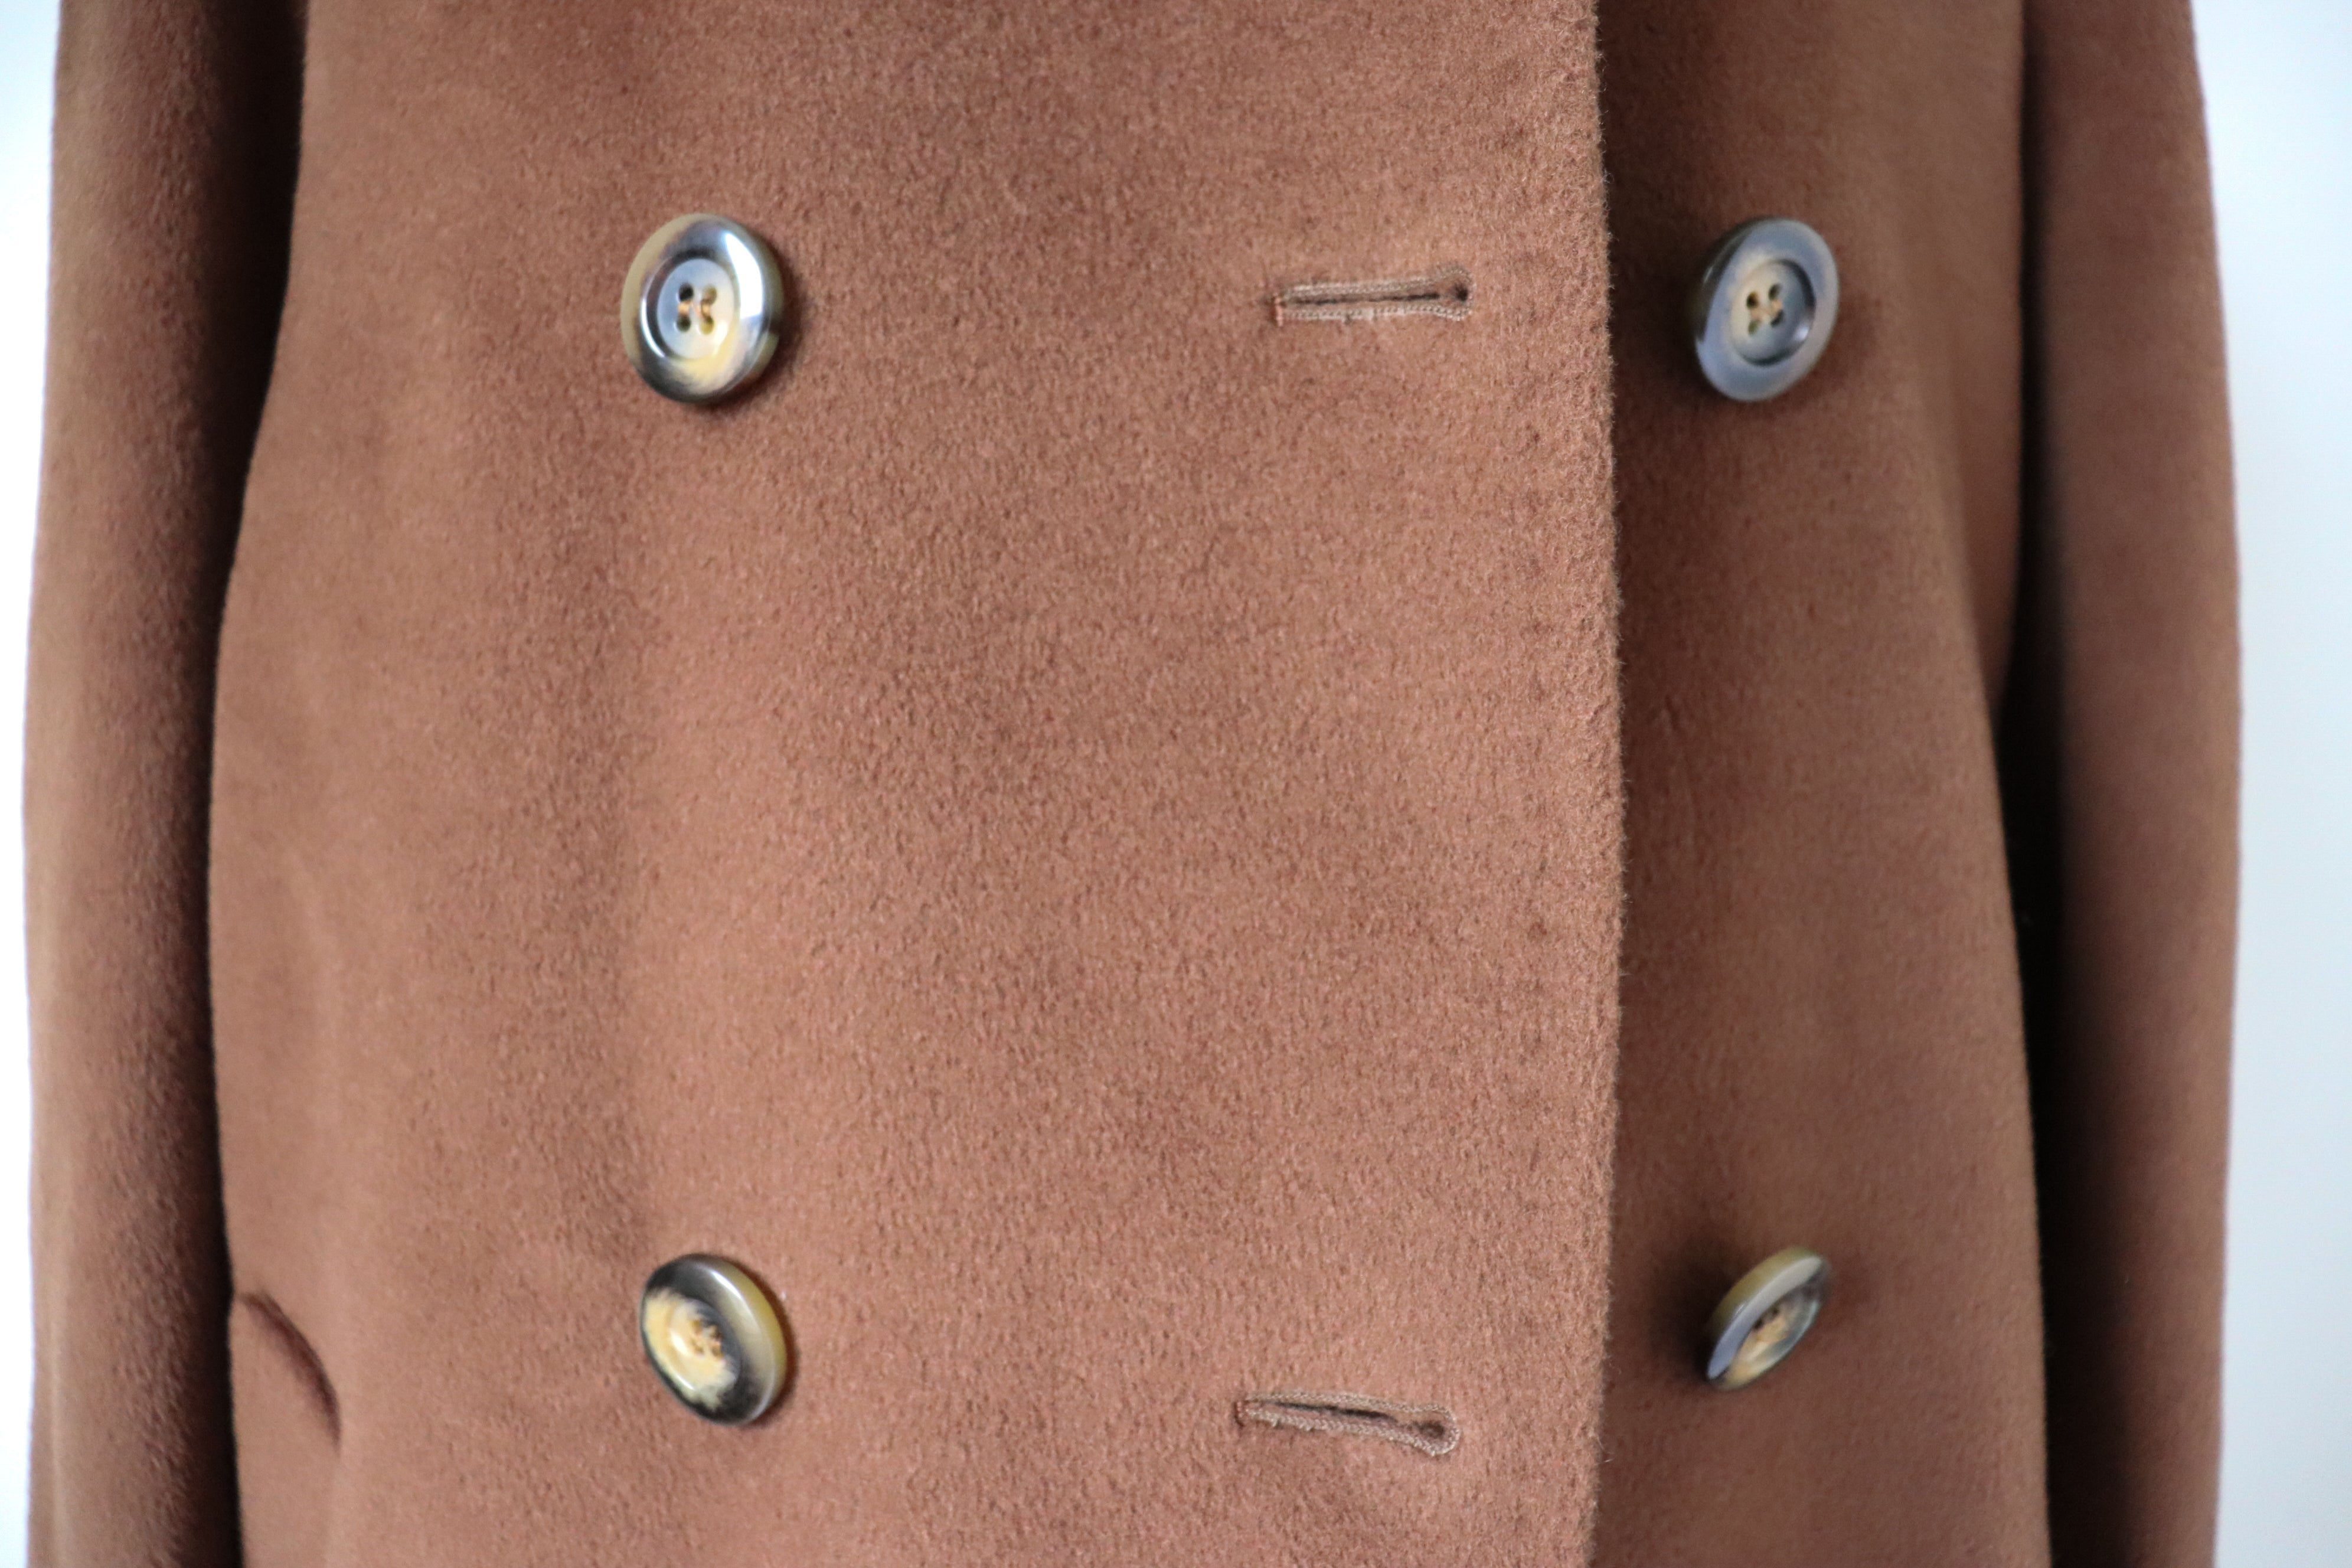 Brown Long Winter Coat - 100% Wool - Vintage 1990s Piacenza / Ivory - UK 12 / M